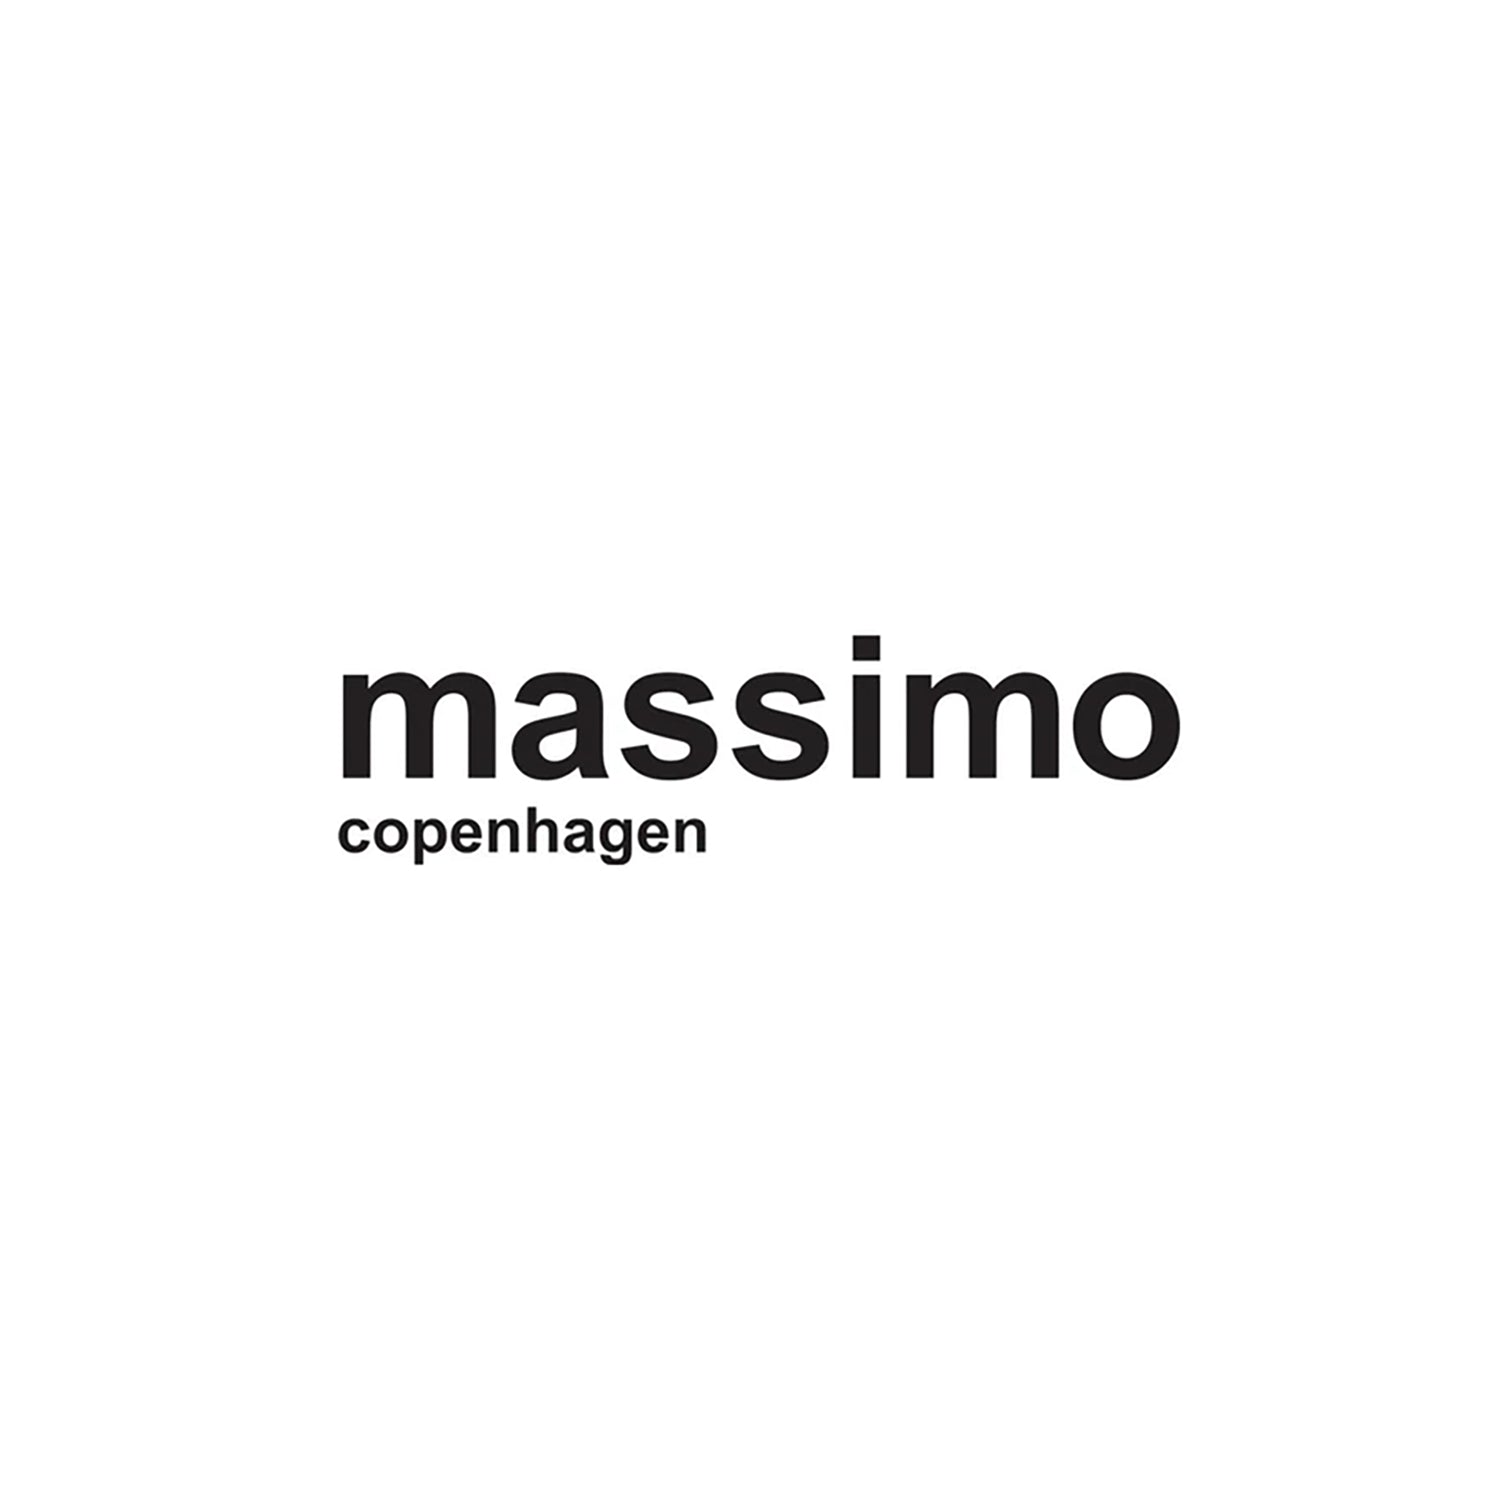 MASSIMO COPENHAGEN